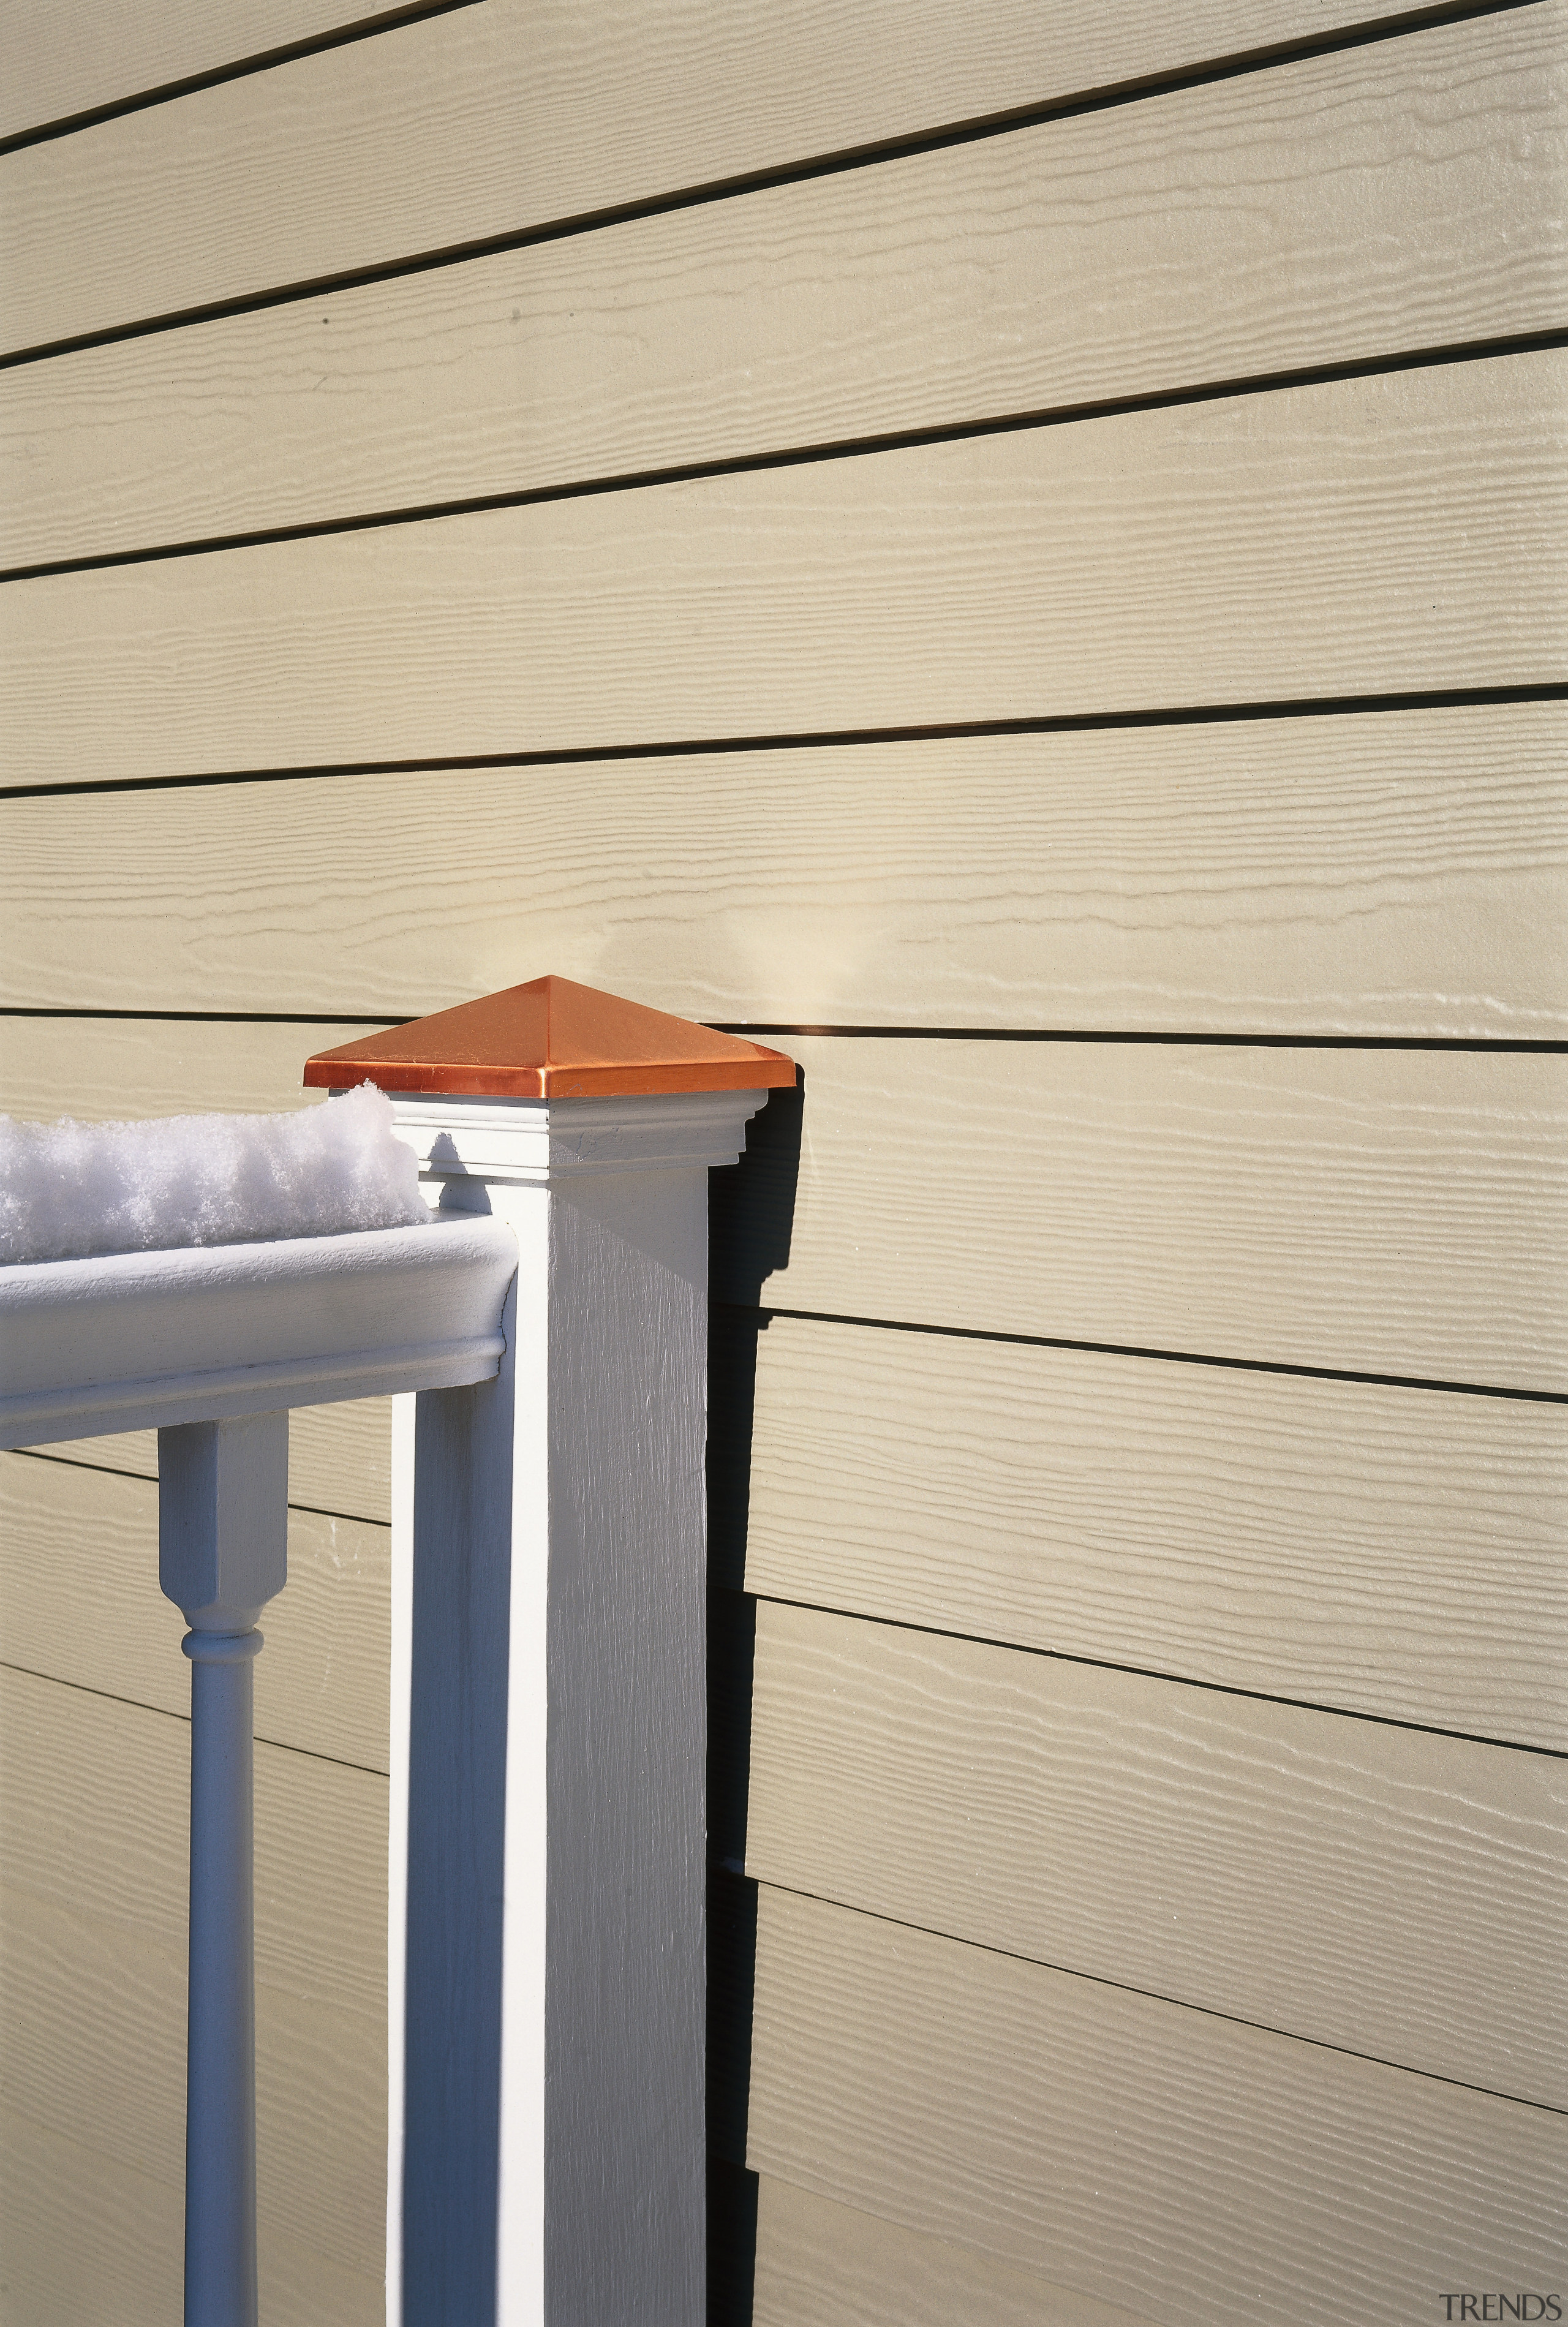 the hardiplank siding has a 5 inch reveal angle, floor, line, wall, wood, wood stain, orange